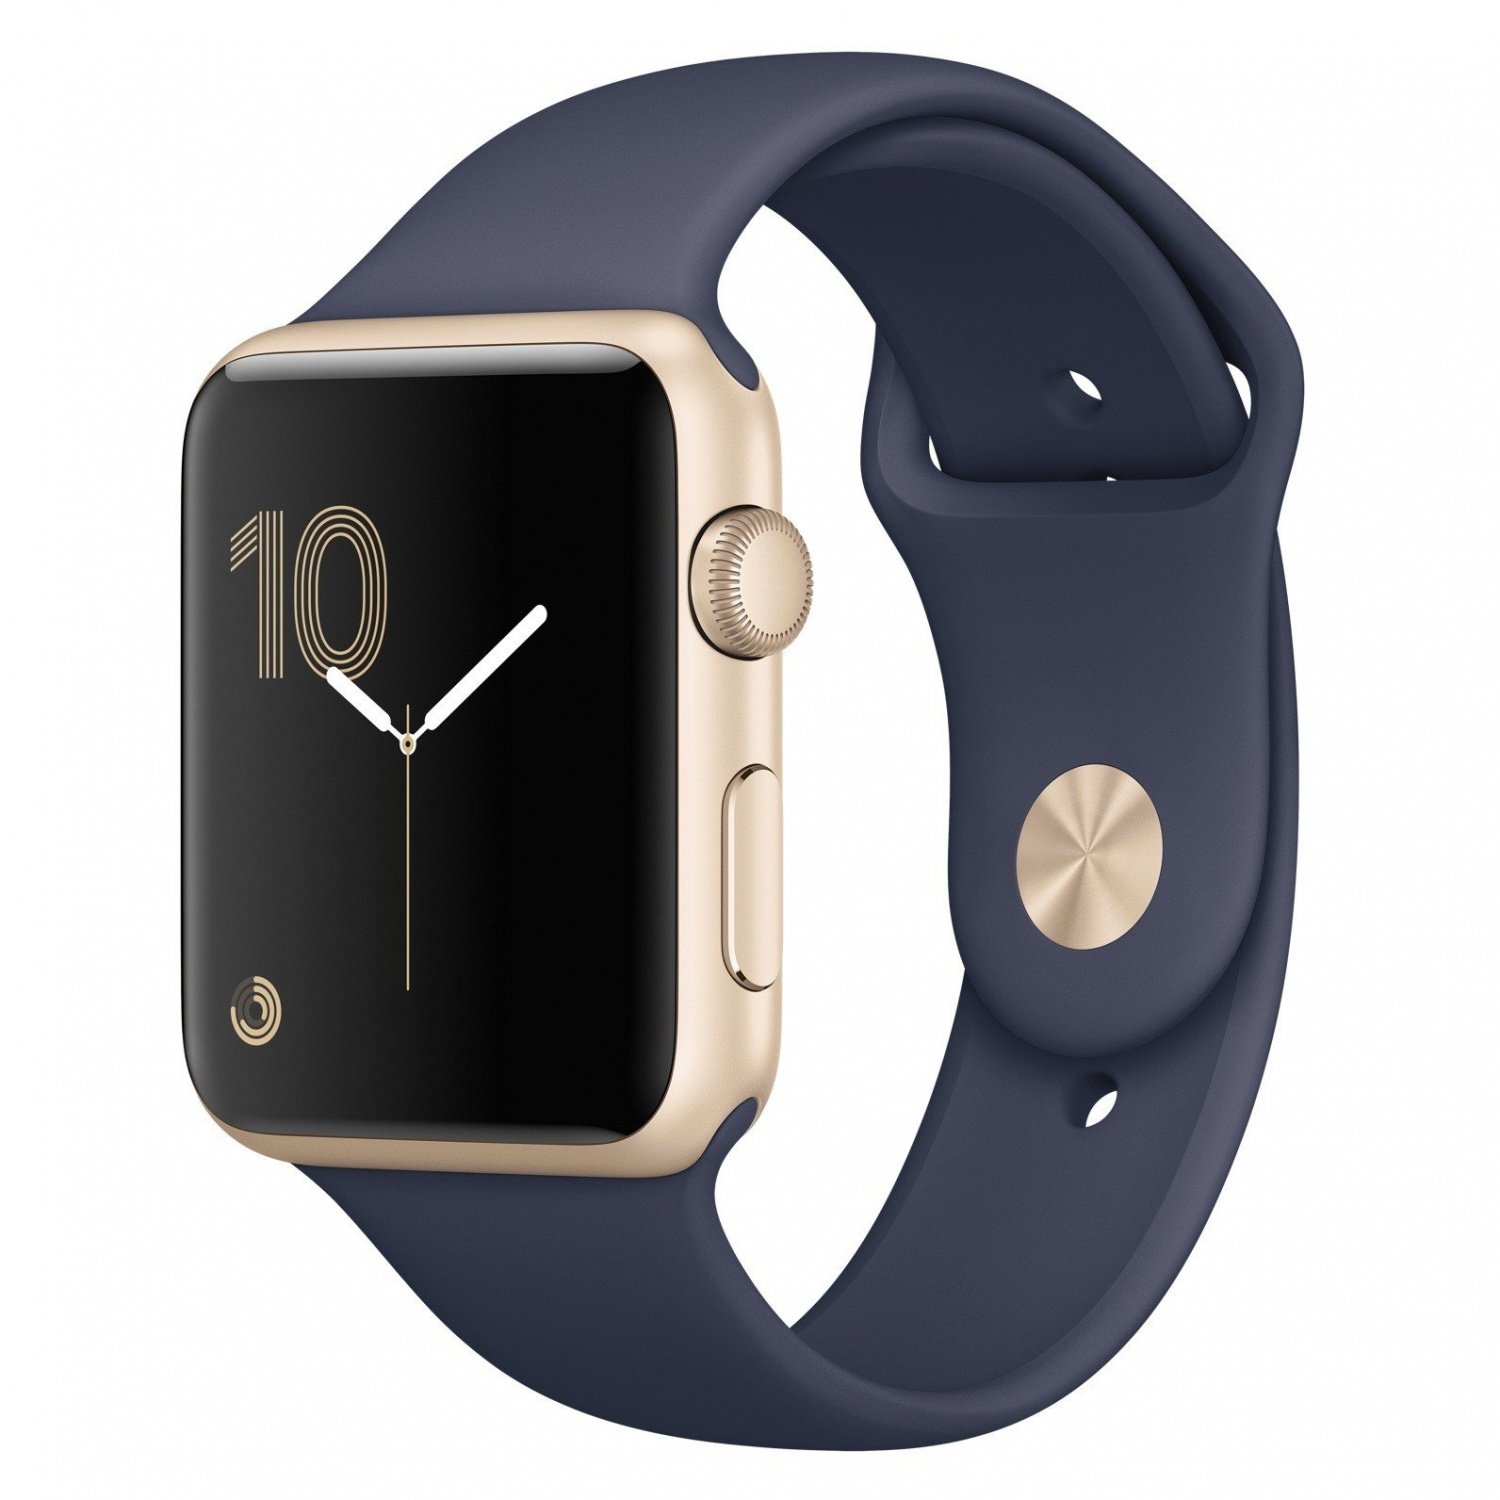 Смартгодинник Apple Watch Series 2 42 MQ152 Gold Al Case with Midnight Blue Sport Band (MQ152FS/A)фото